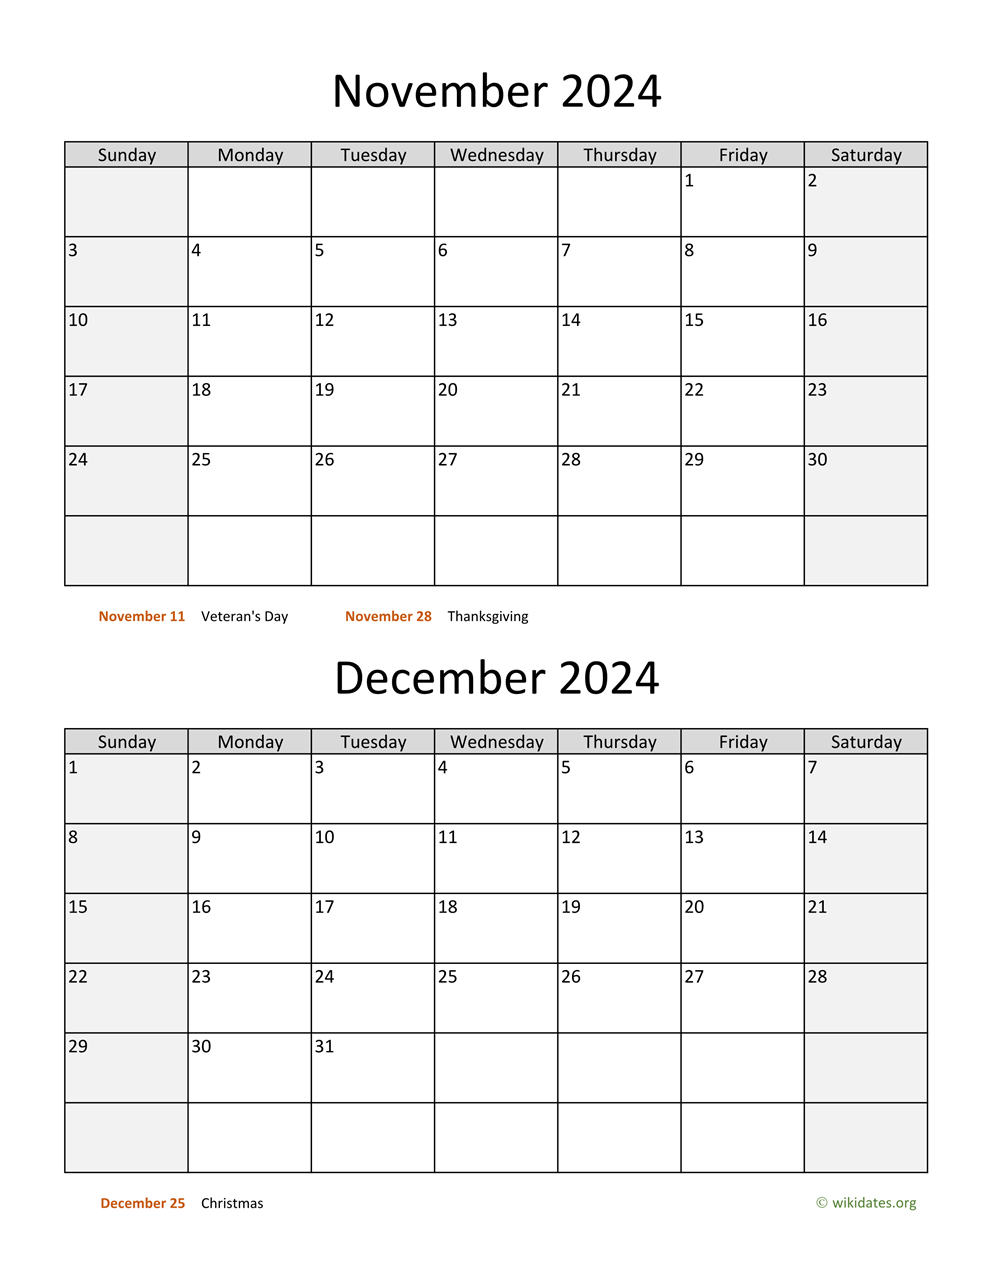 November and December 2024 Calendar